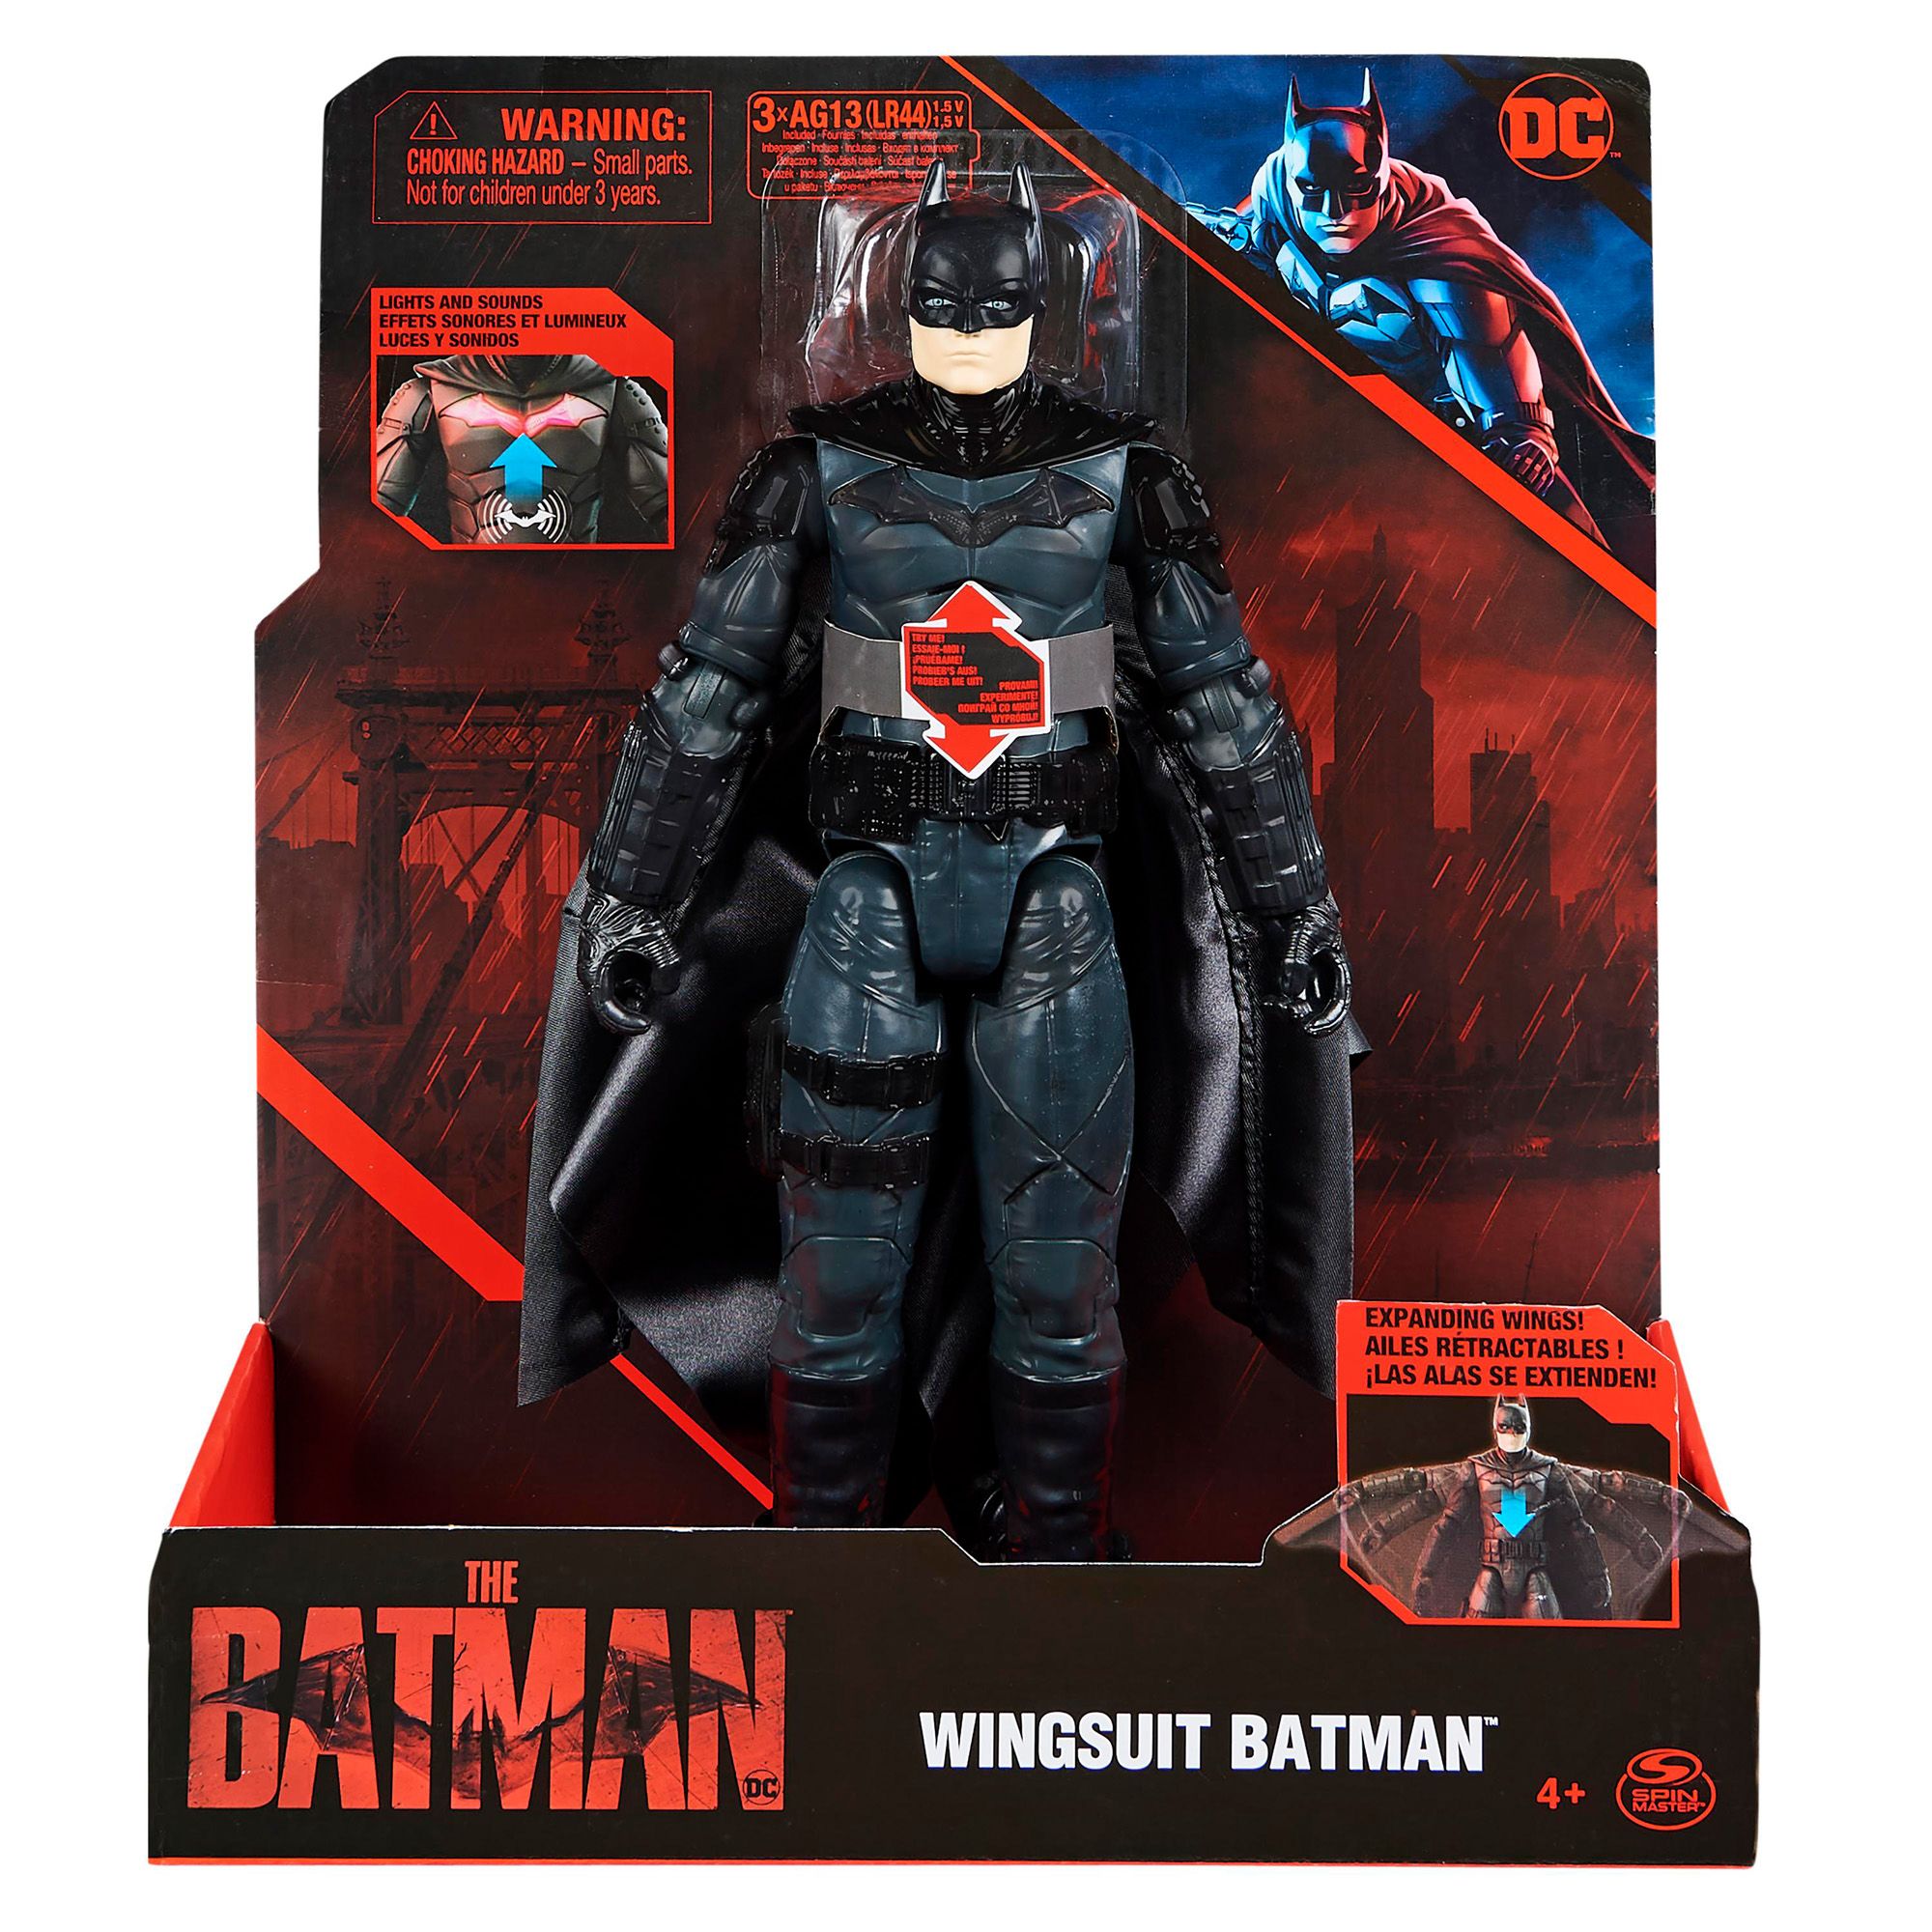 Wingsuit Batman 12-Inch